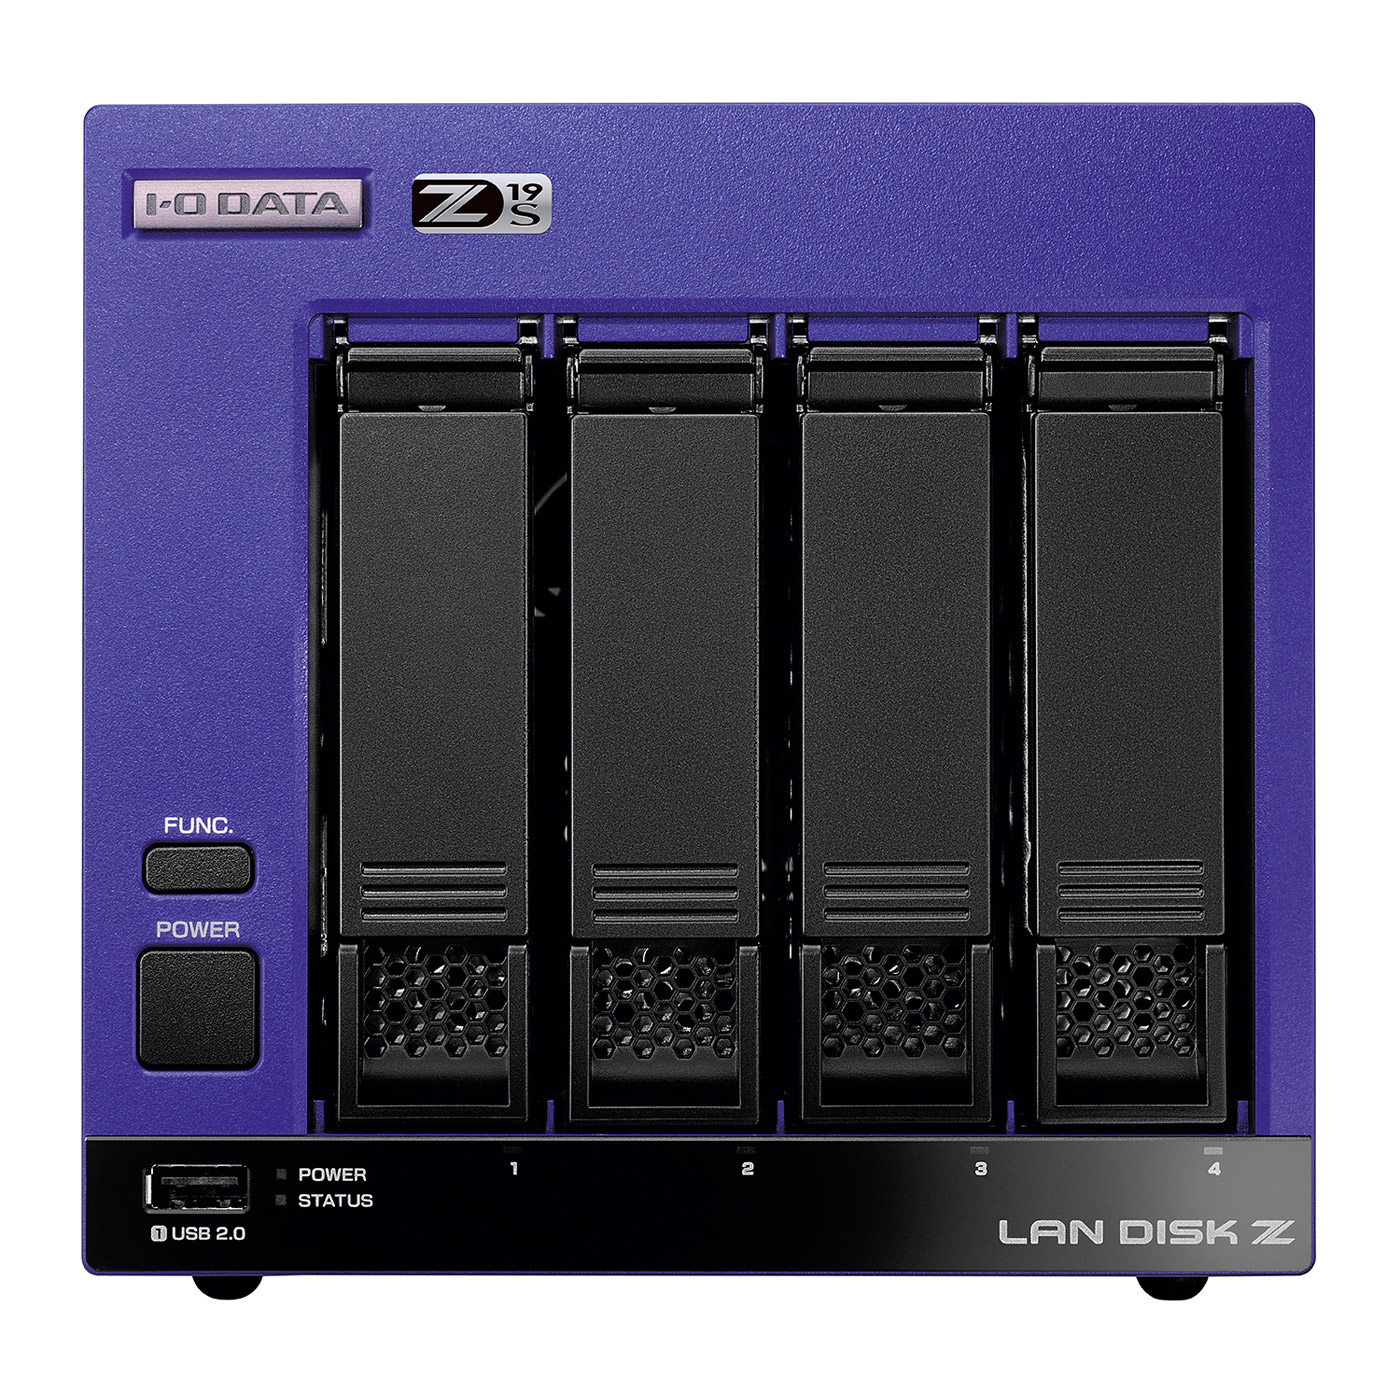 I-O DATA LAN DISK HDL4-X2 NAS 2TB 外付けハードディスク - 周辺機器